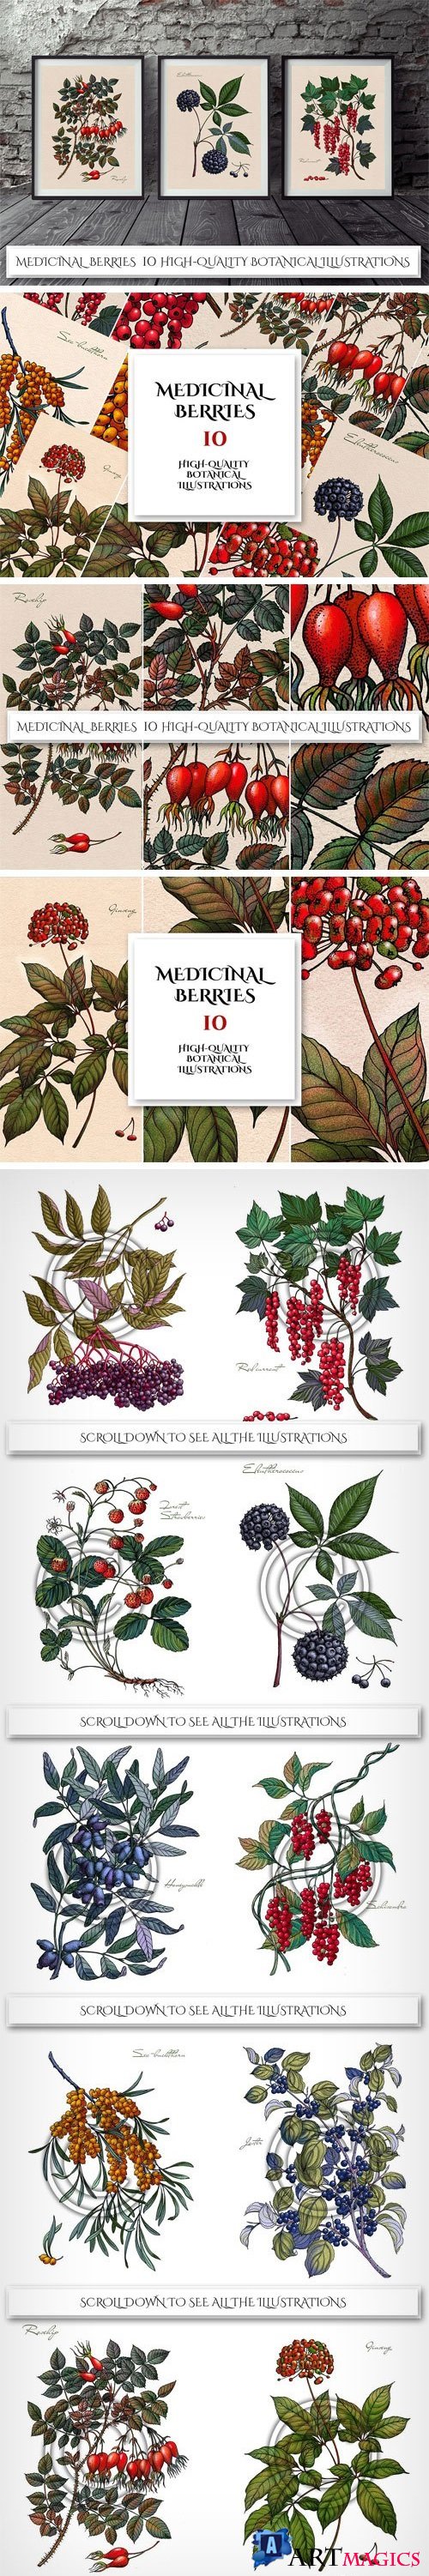 Botanical Illustrations. Berries - 2011617